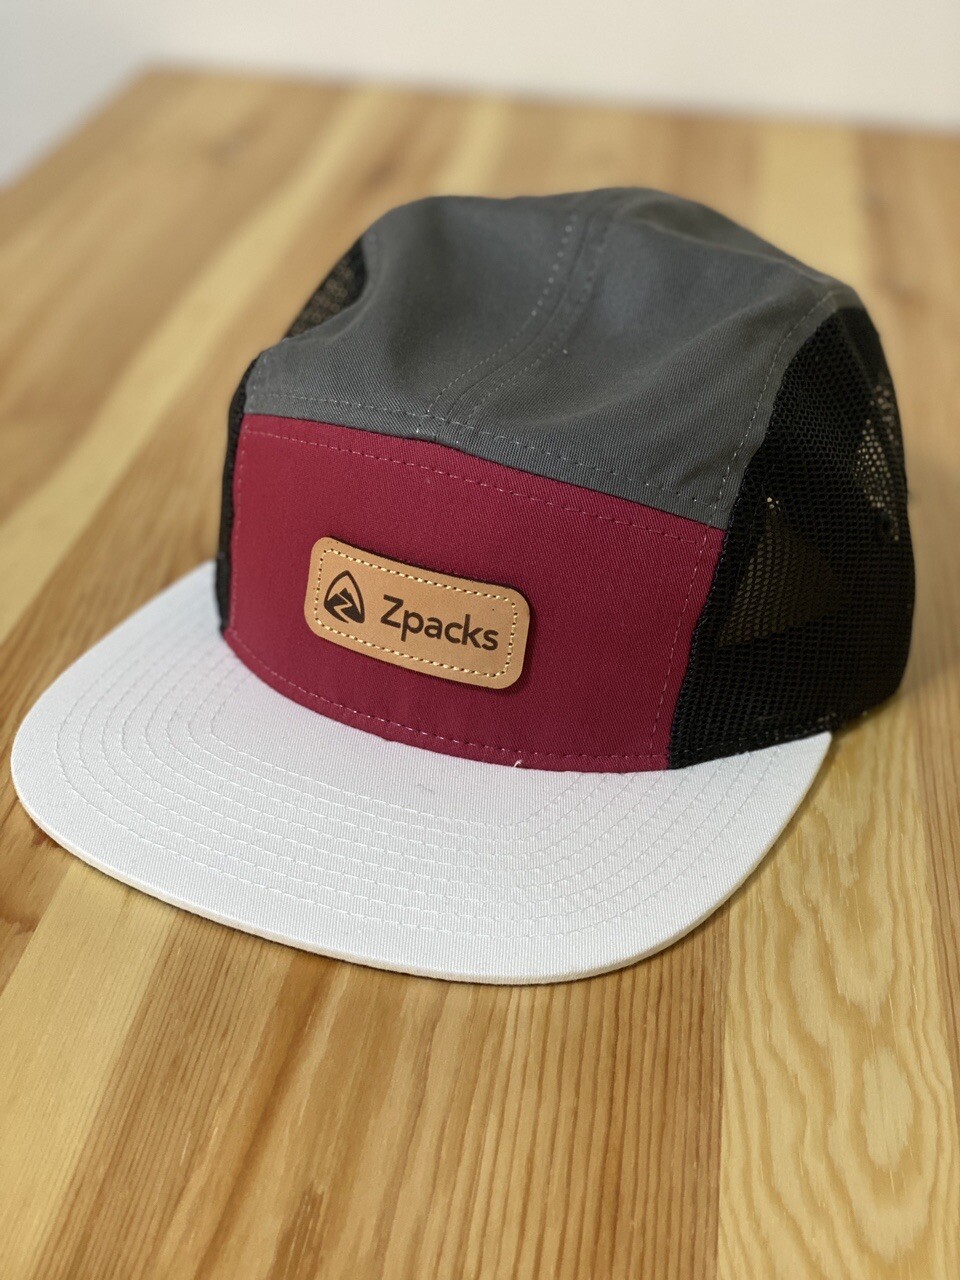 Zpacks 5 Panel Hat 完売品 数回着用検索用 - 登山用品